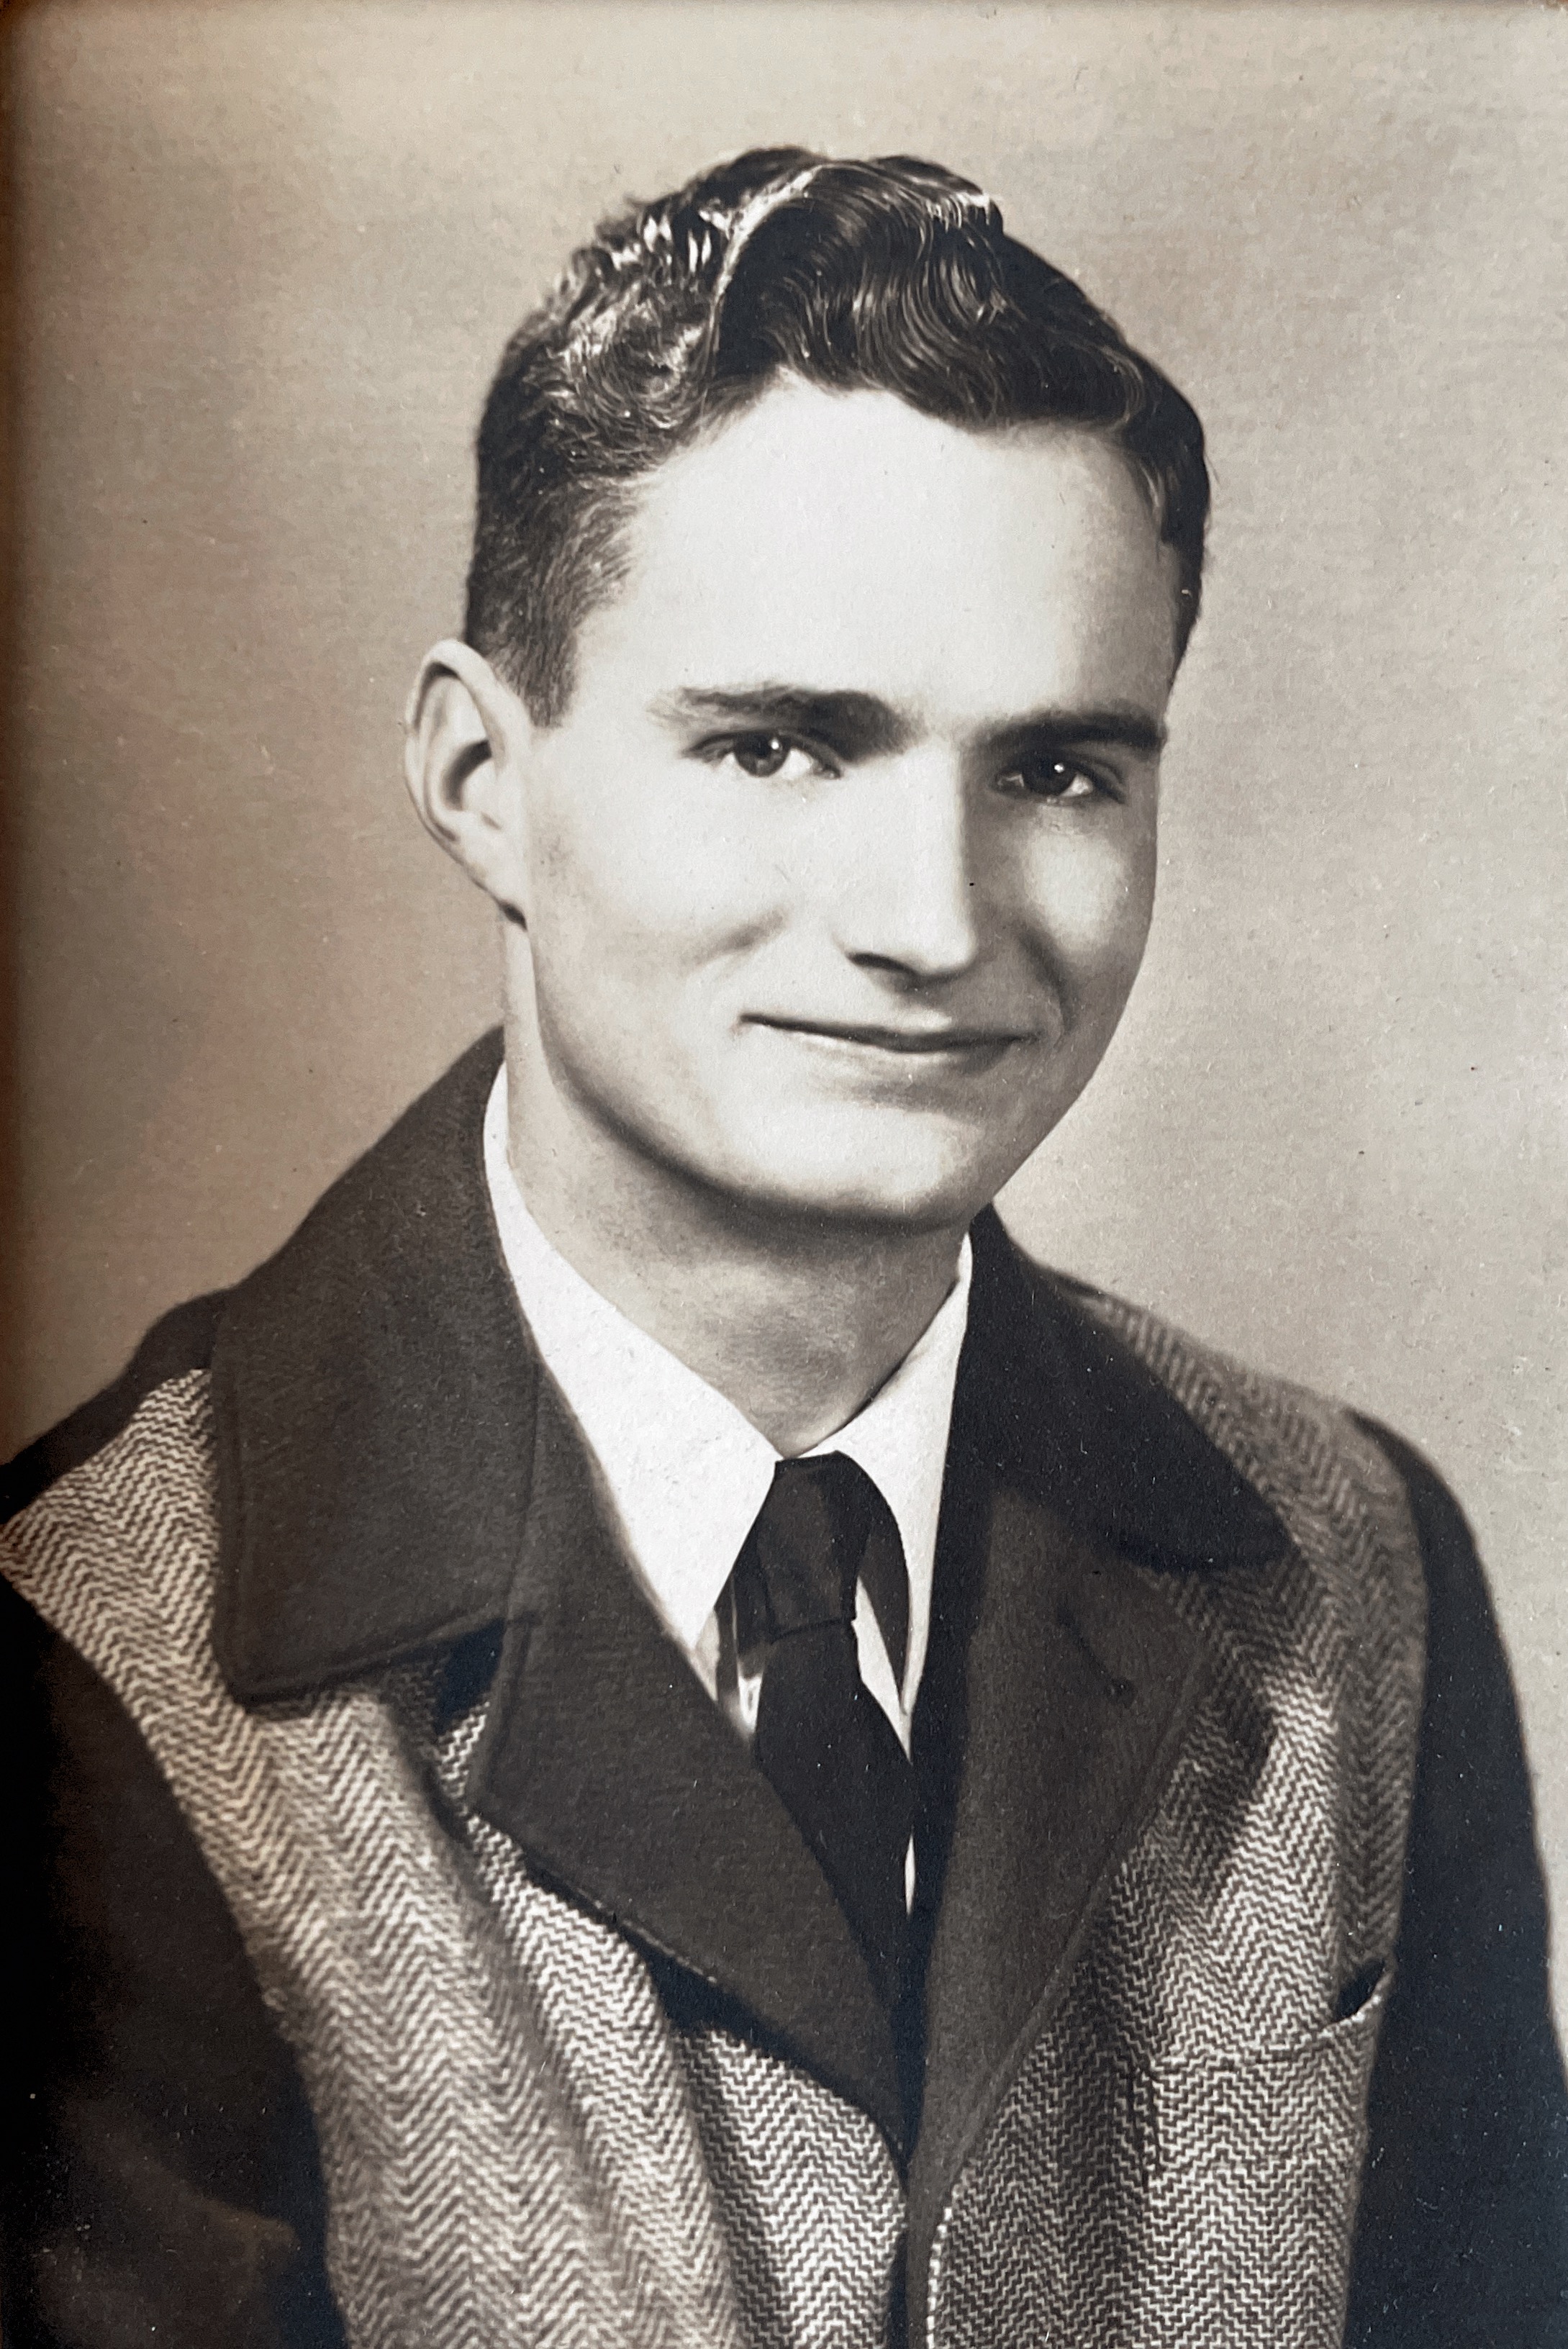 Dad’s Senior picture taken at Burch Studio in 1949.